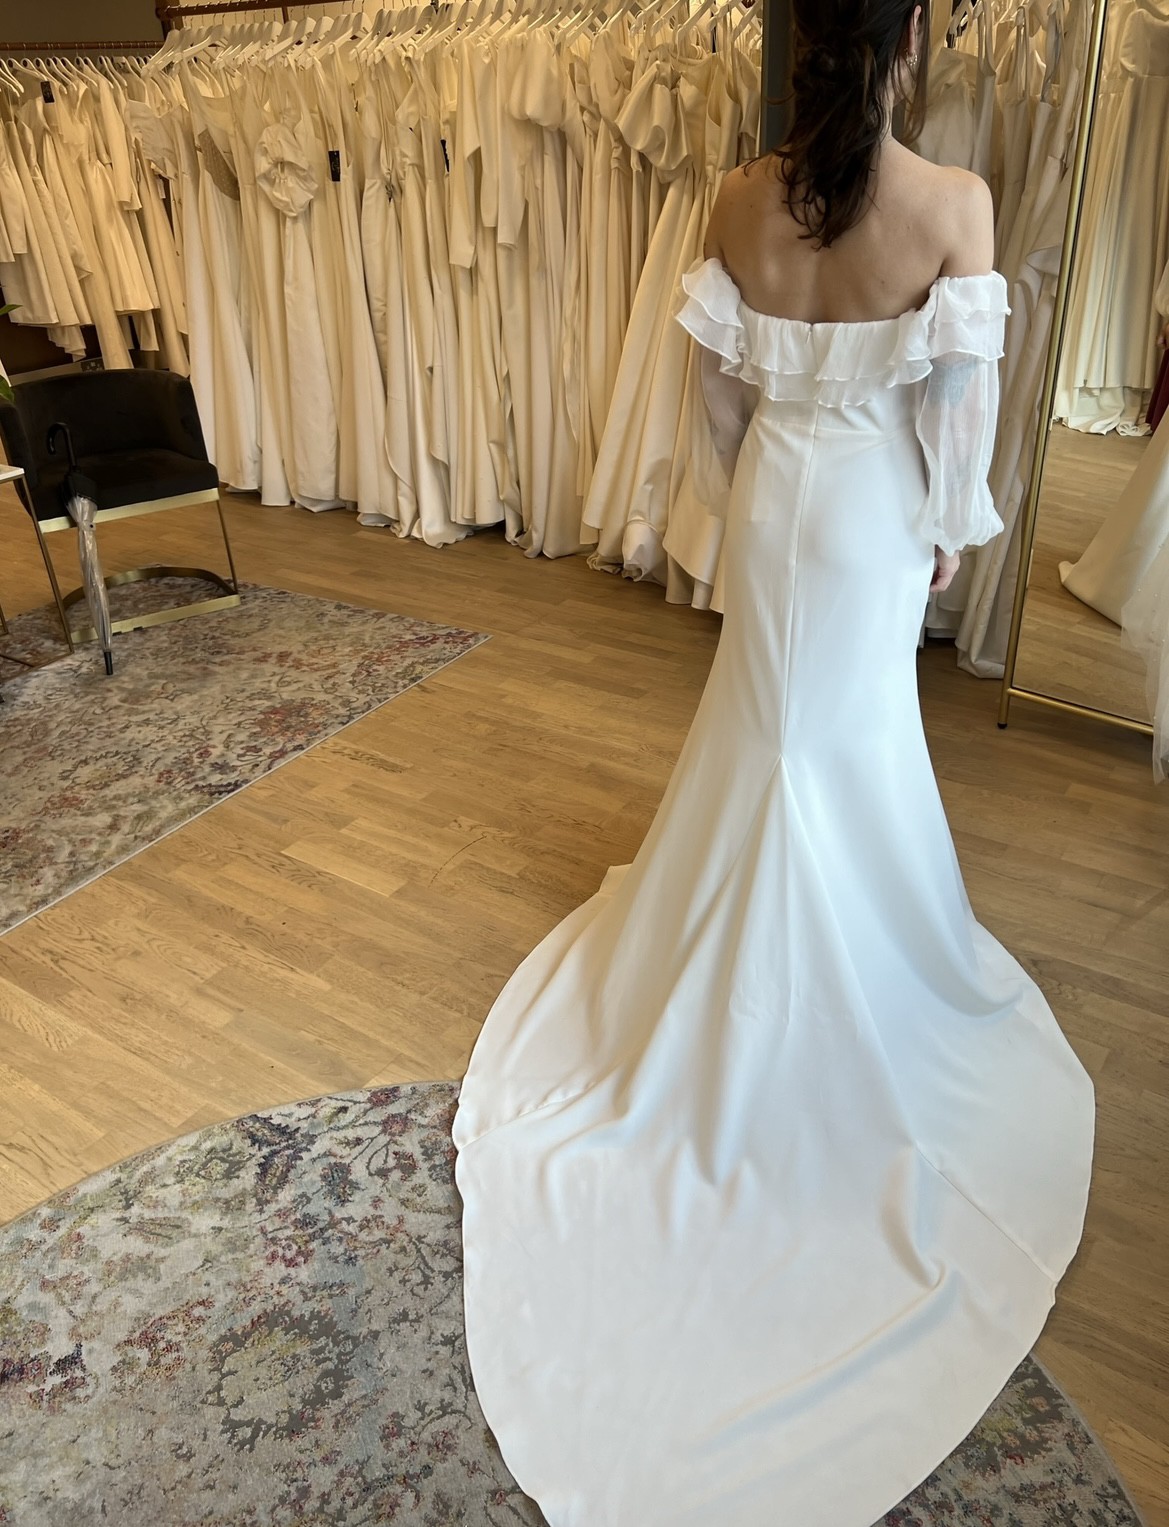 Scout Bridal Getaway Sample Wedding Dress Save 44% - Stillwhite